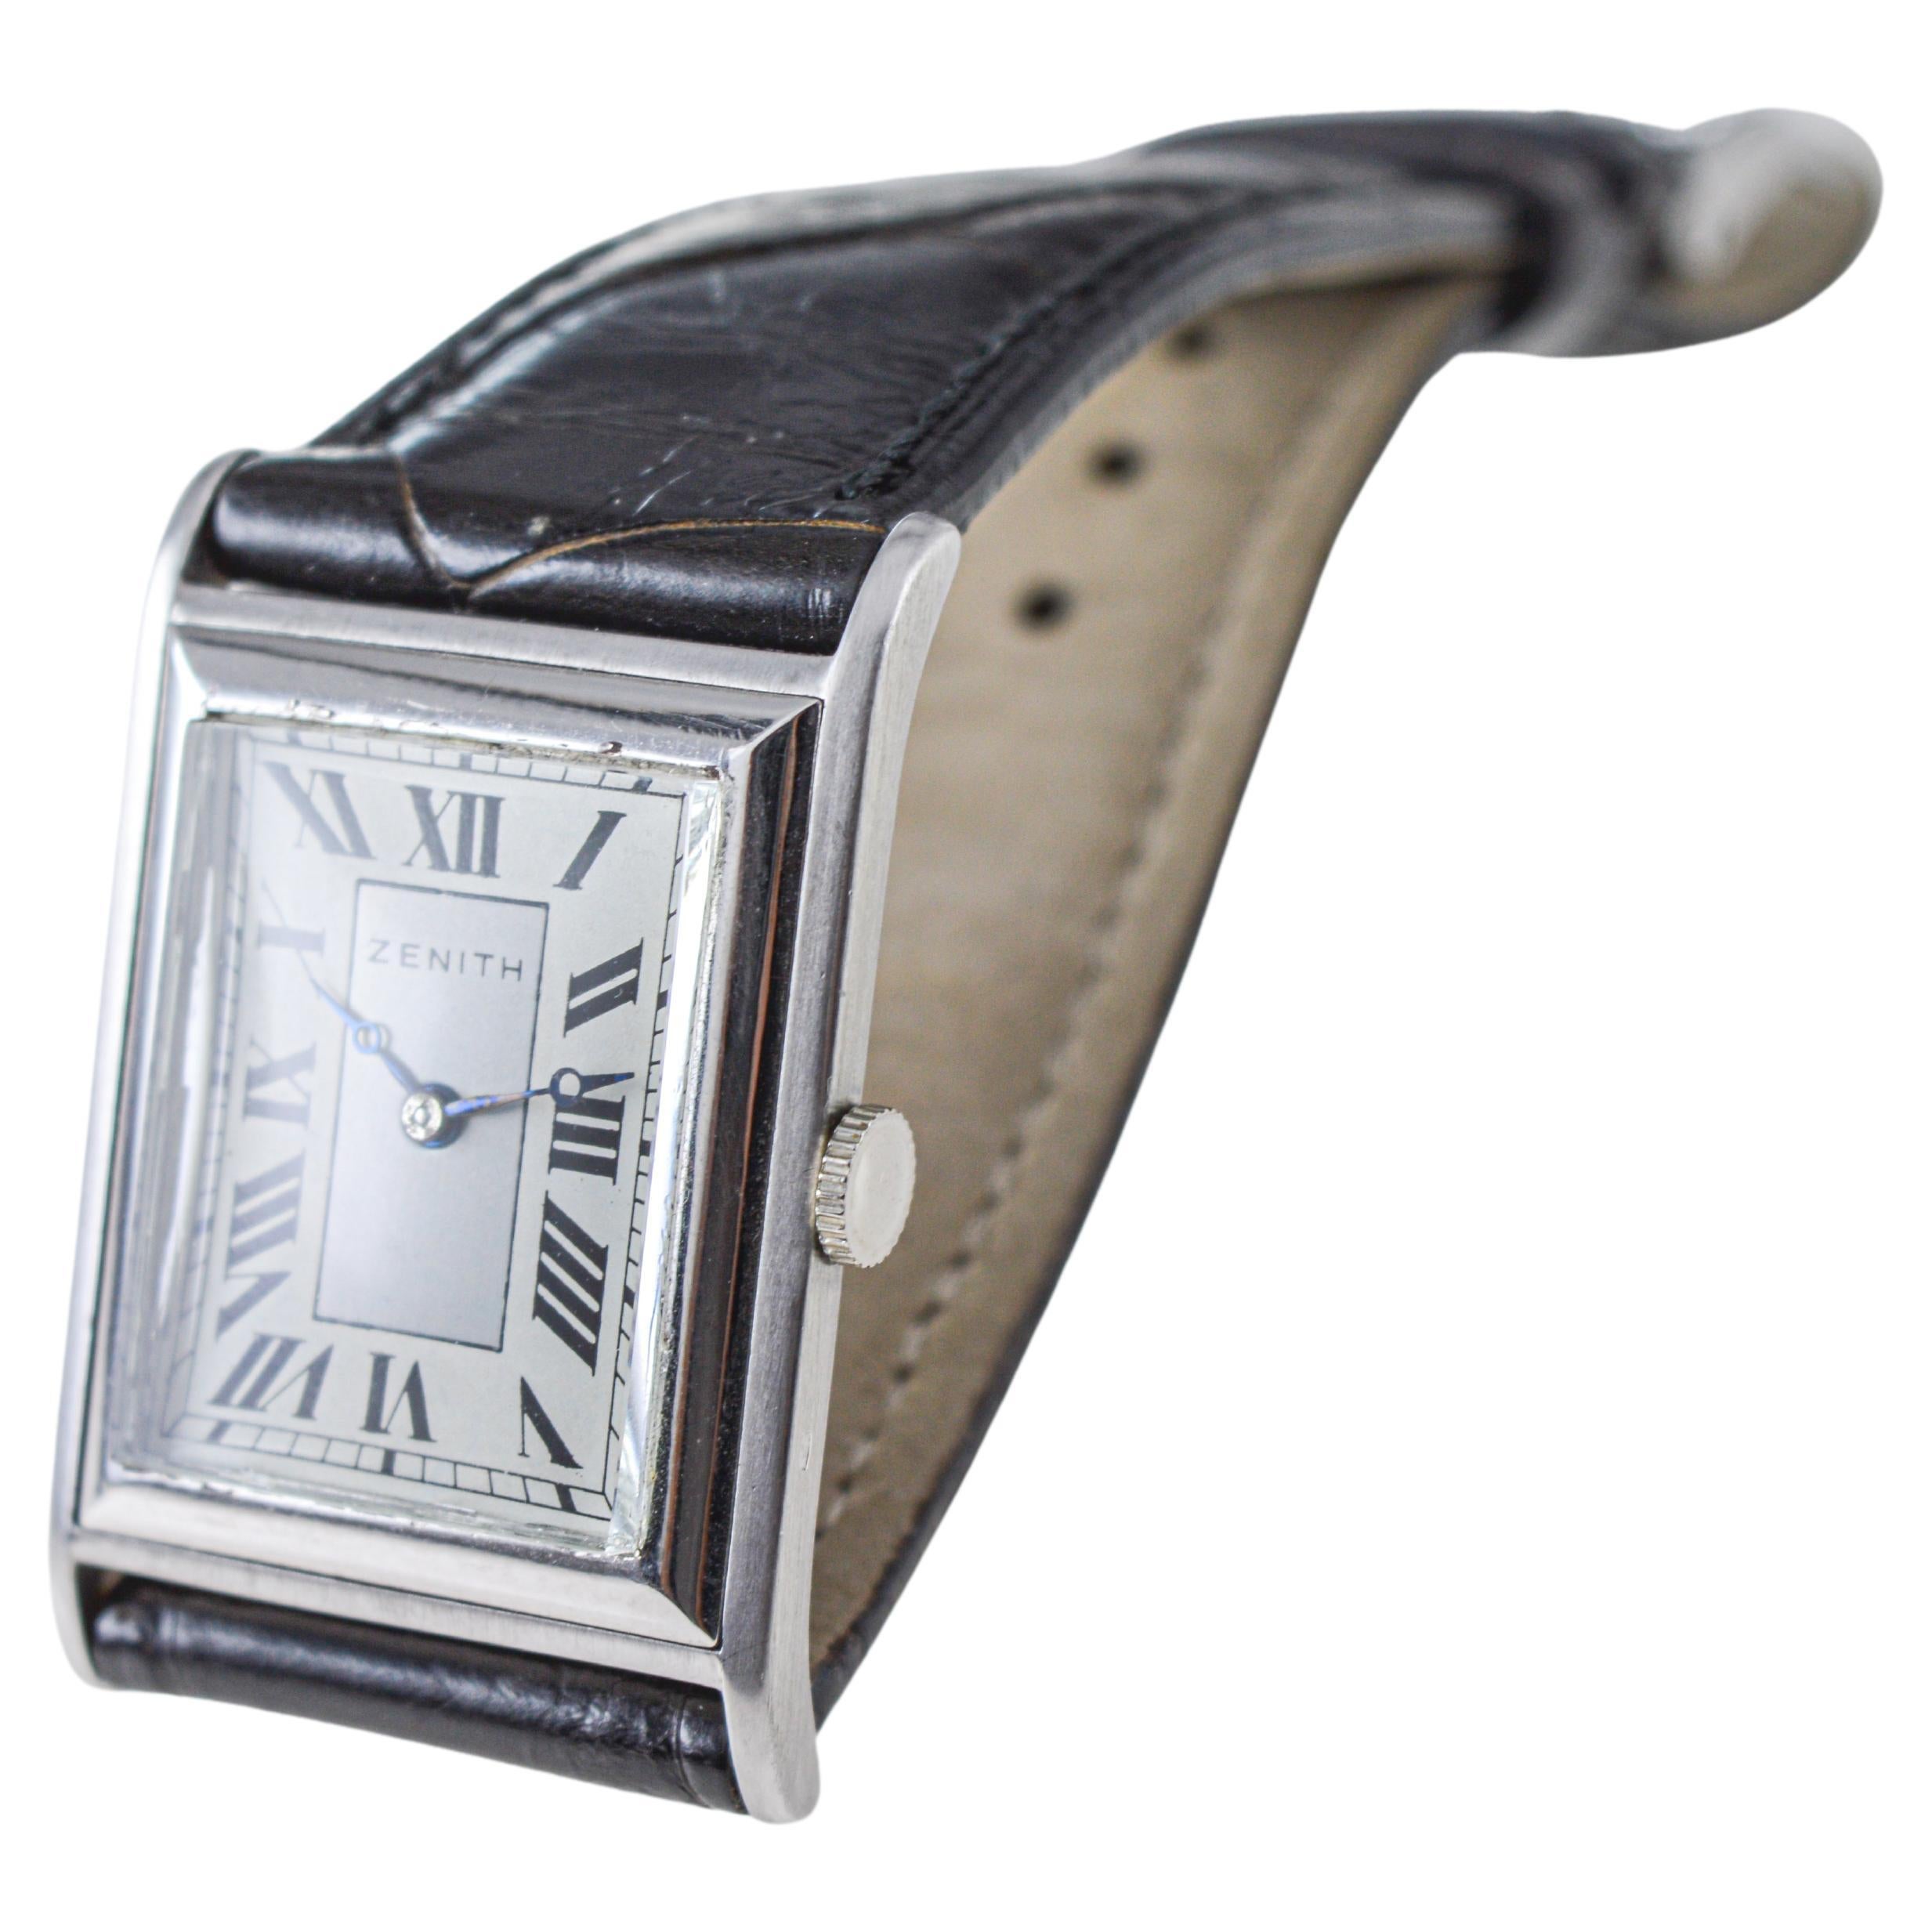 Zenith 18 Karat White Gold Art Deco Tank Style Watch, circa 1930s For Sale 5